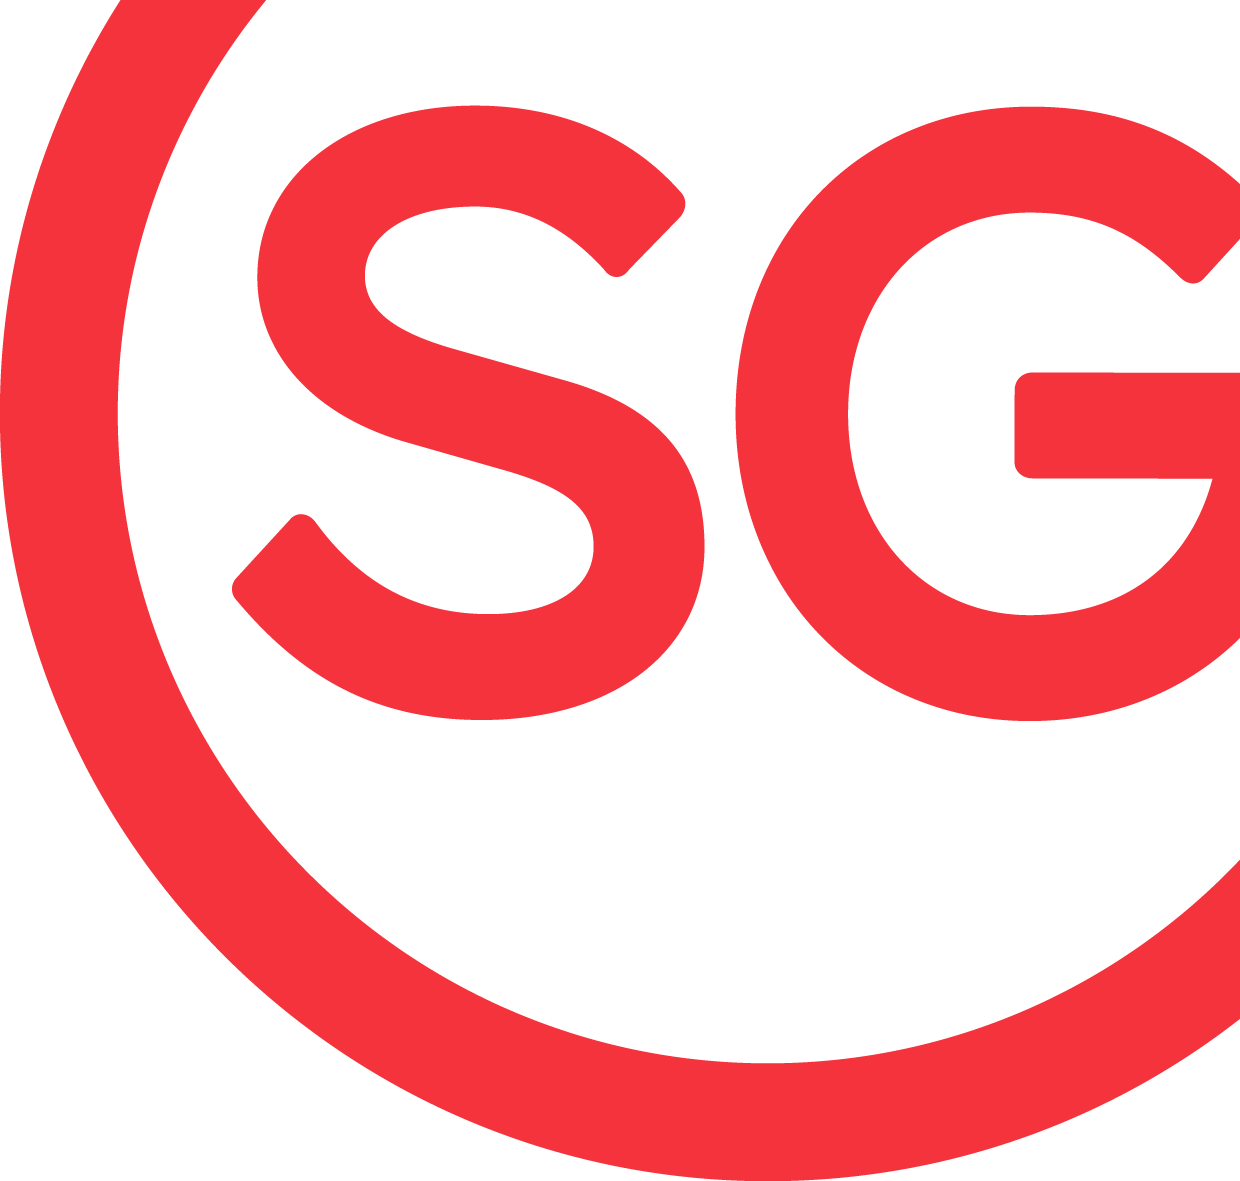 SG Logo - STB-owned - Logos